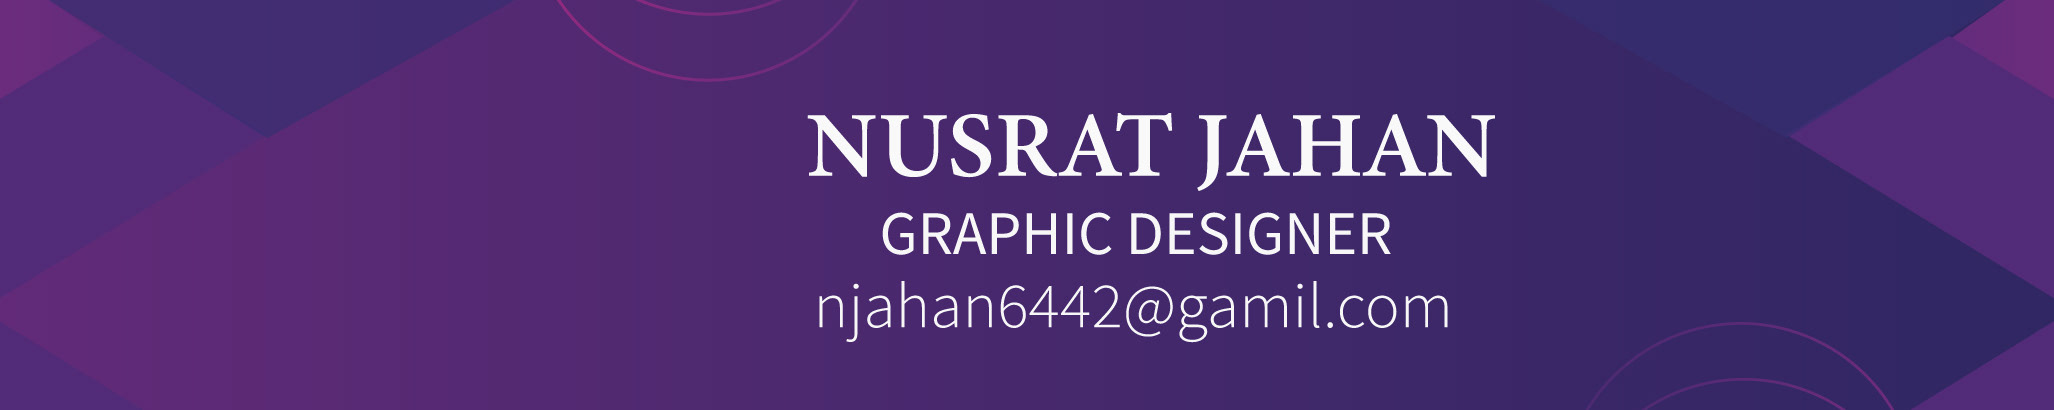 Nusrat Jahan's profile banner